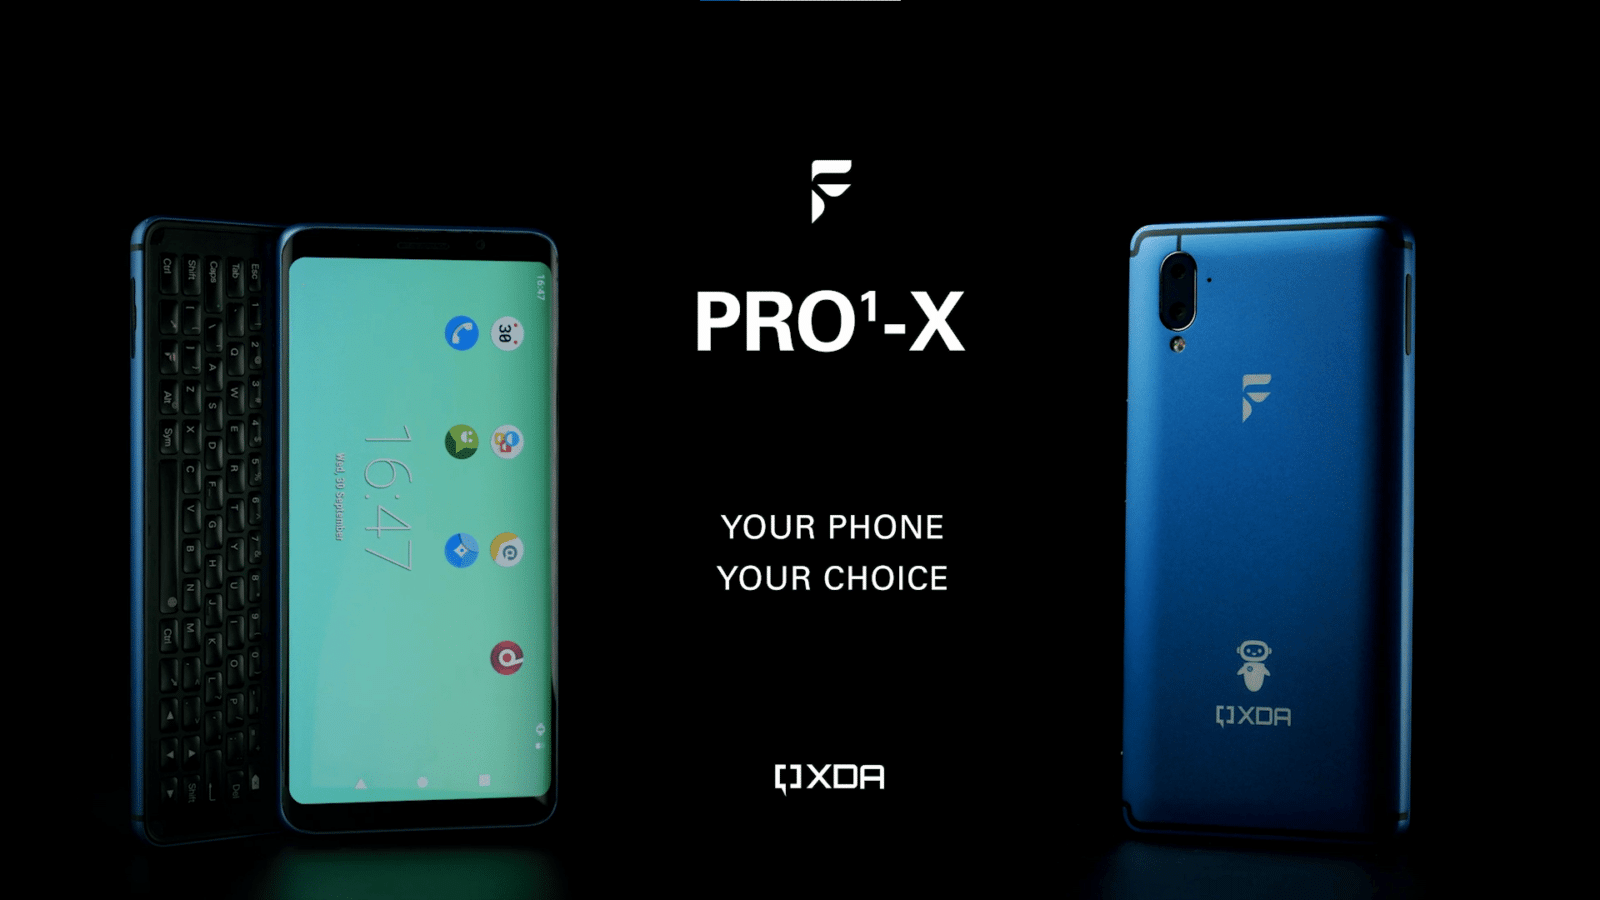 Pro1-X